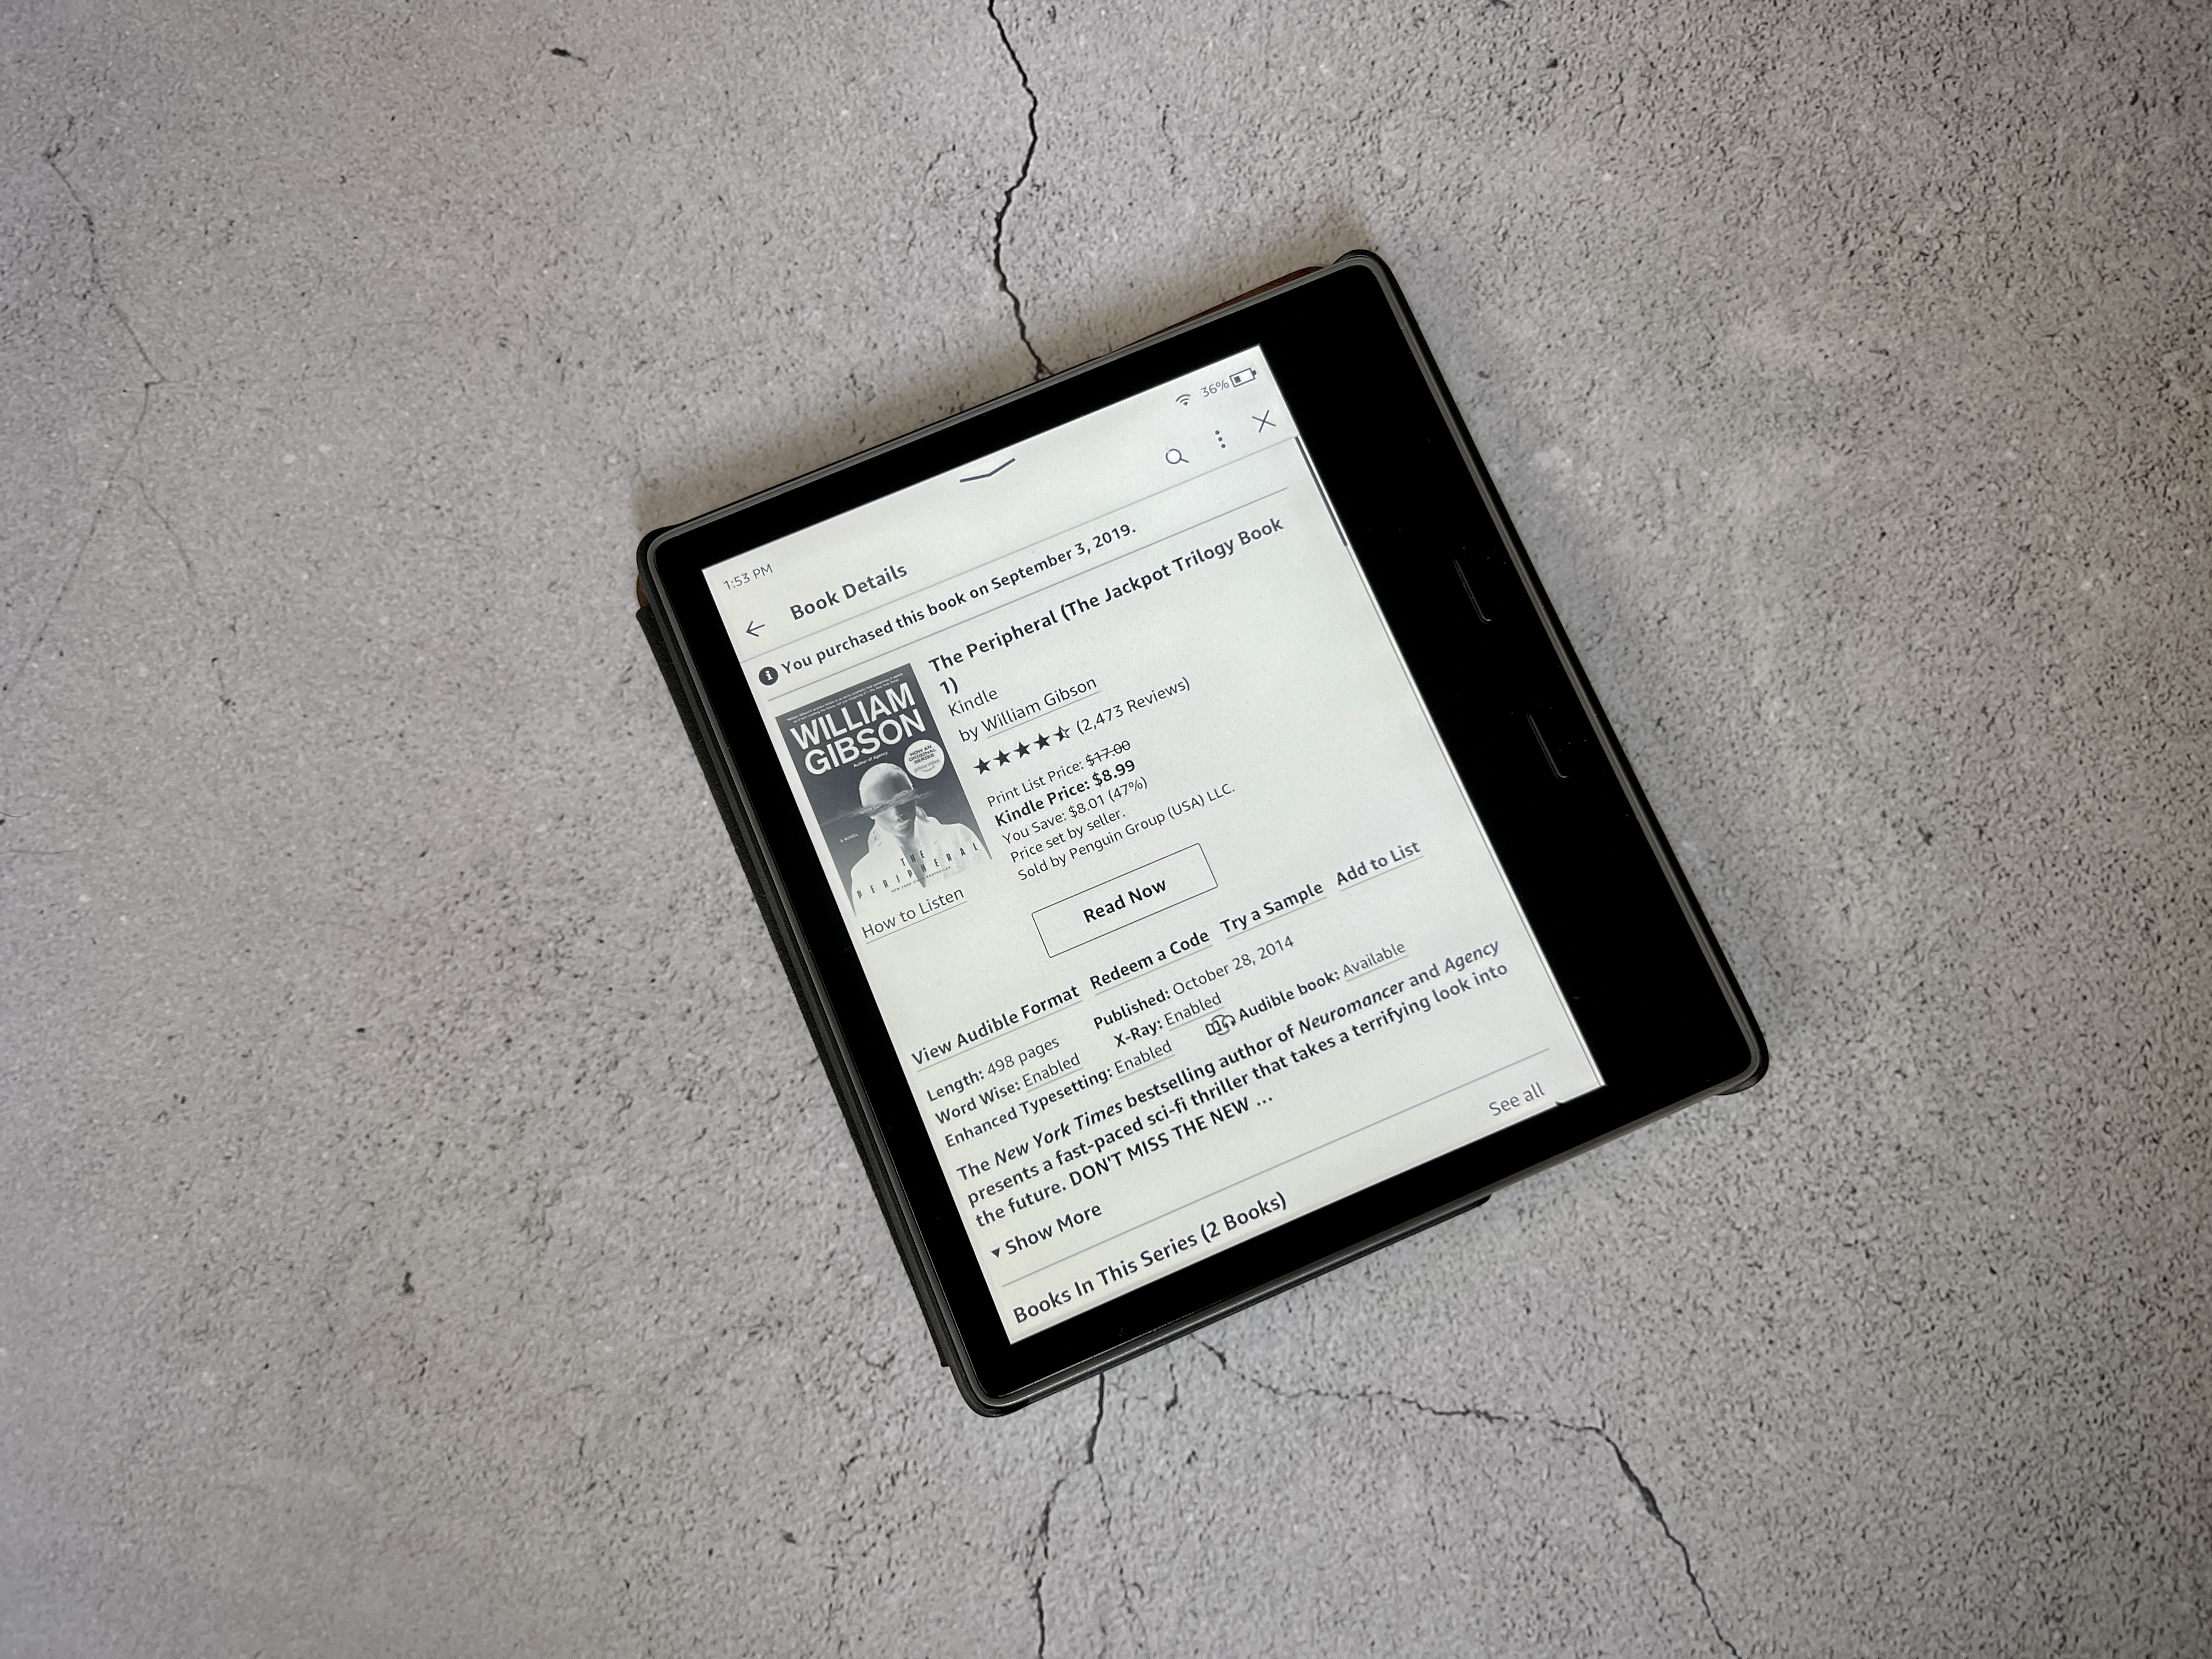 Download a book onto your eReader – Rakuten Kobo